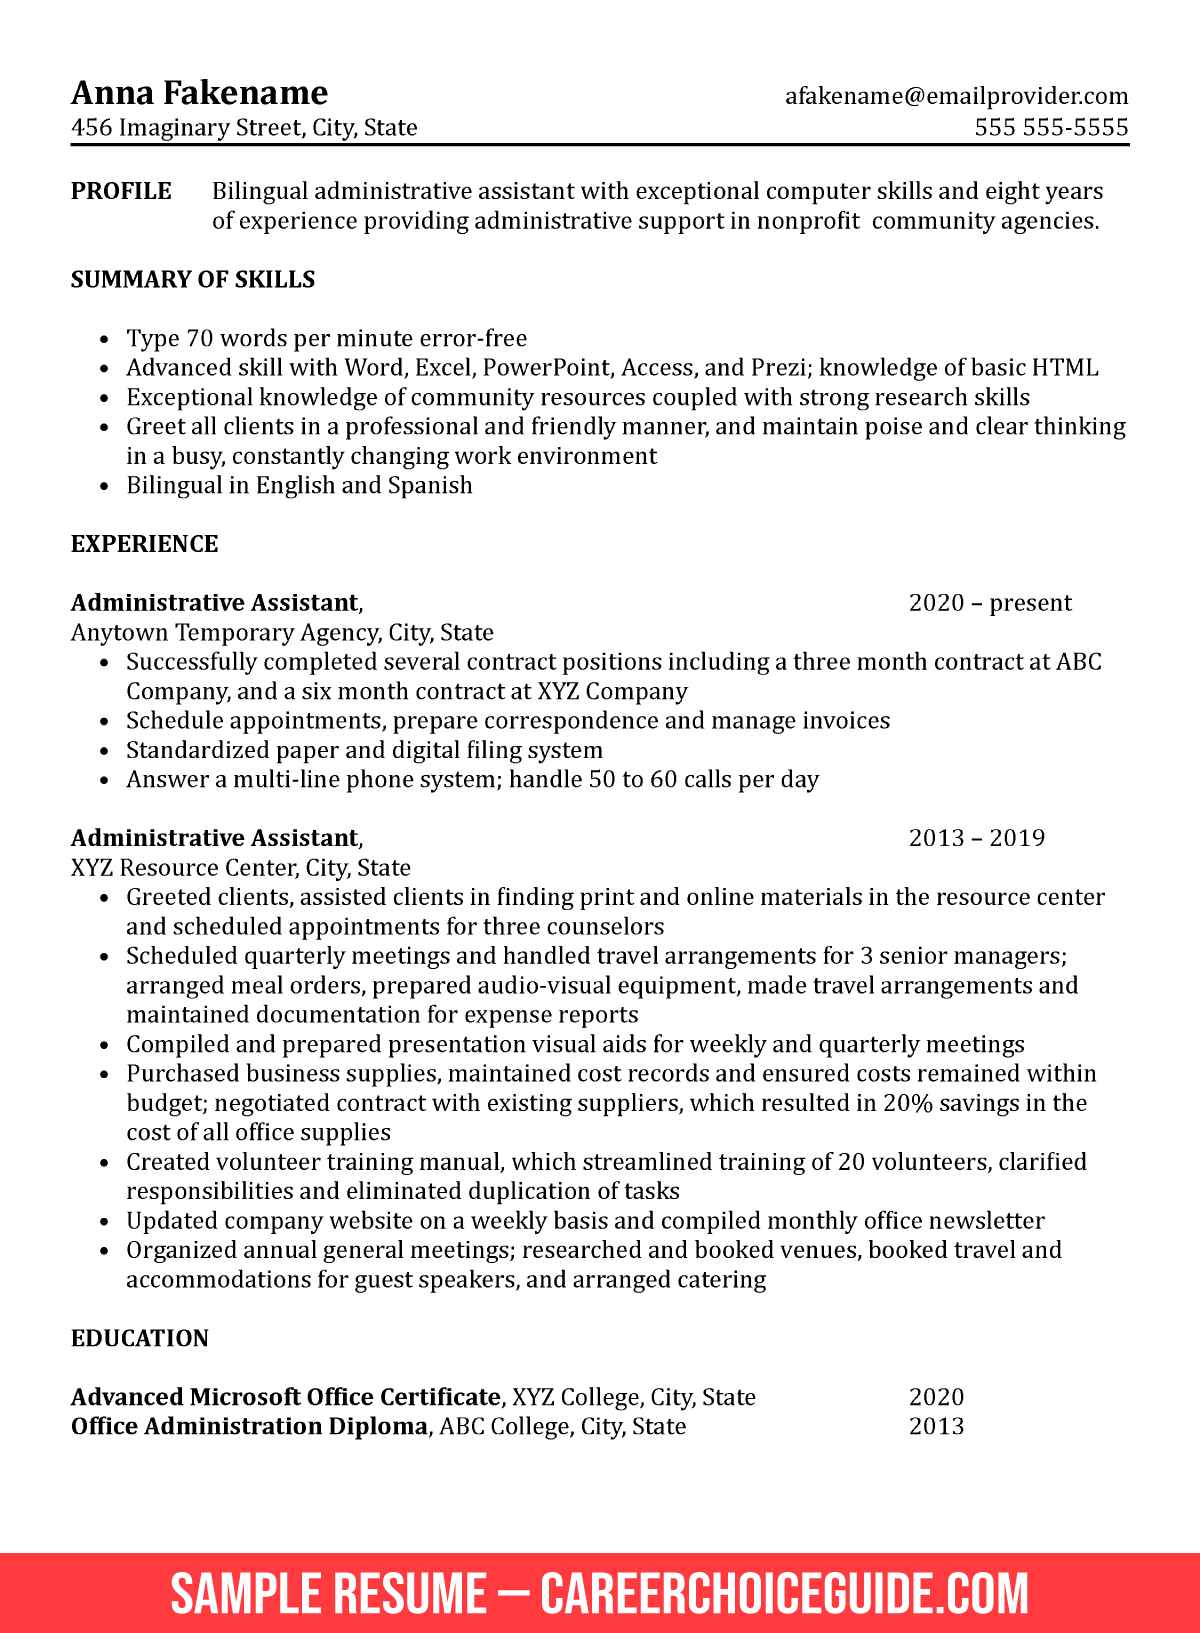 Administrative assistant job skills for resume